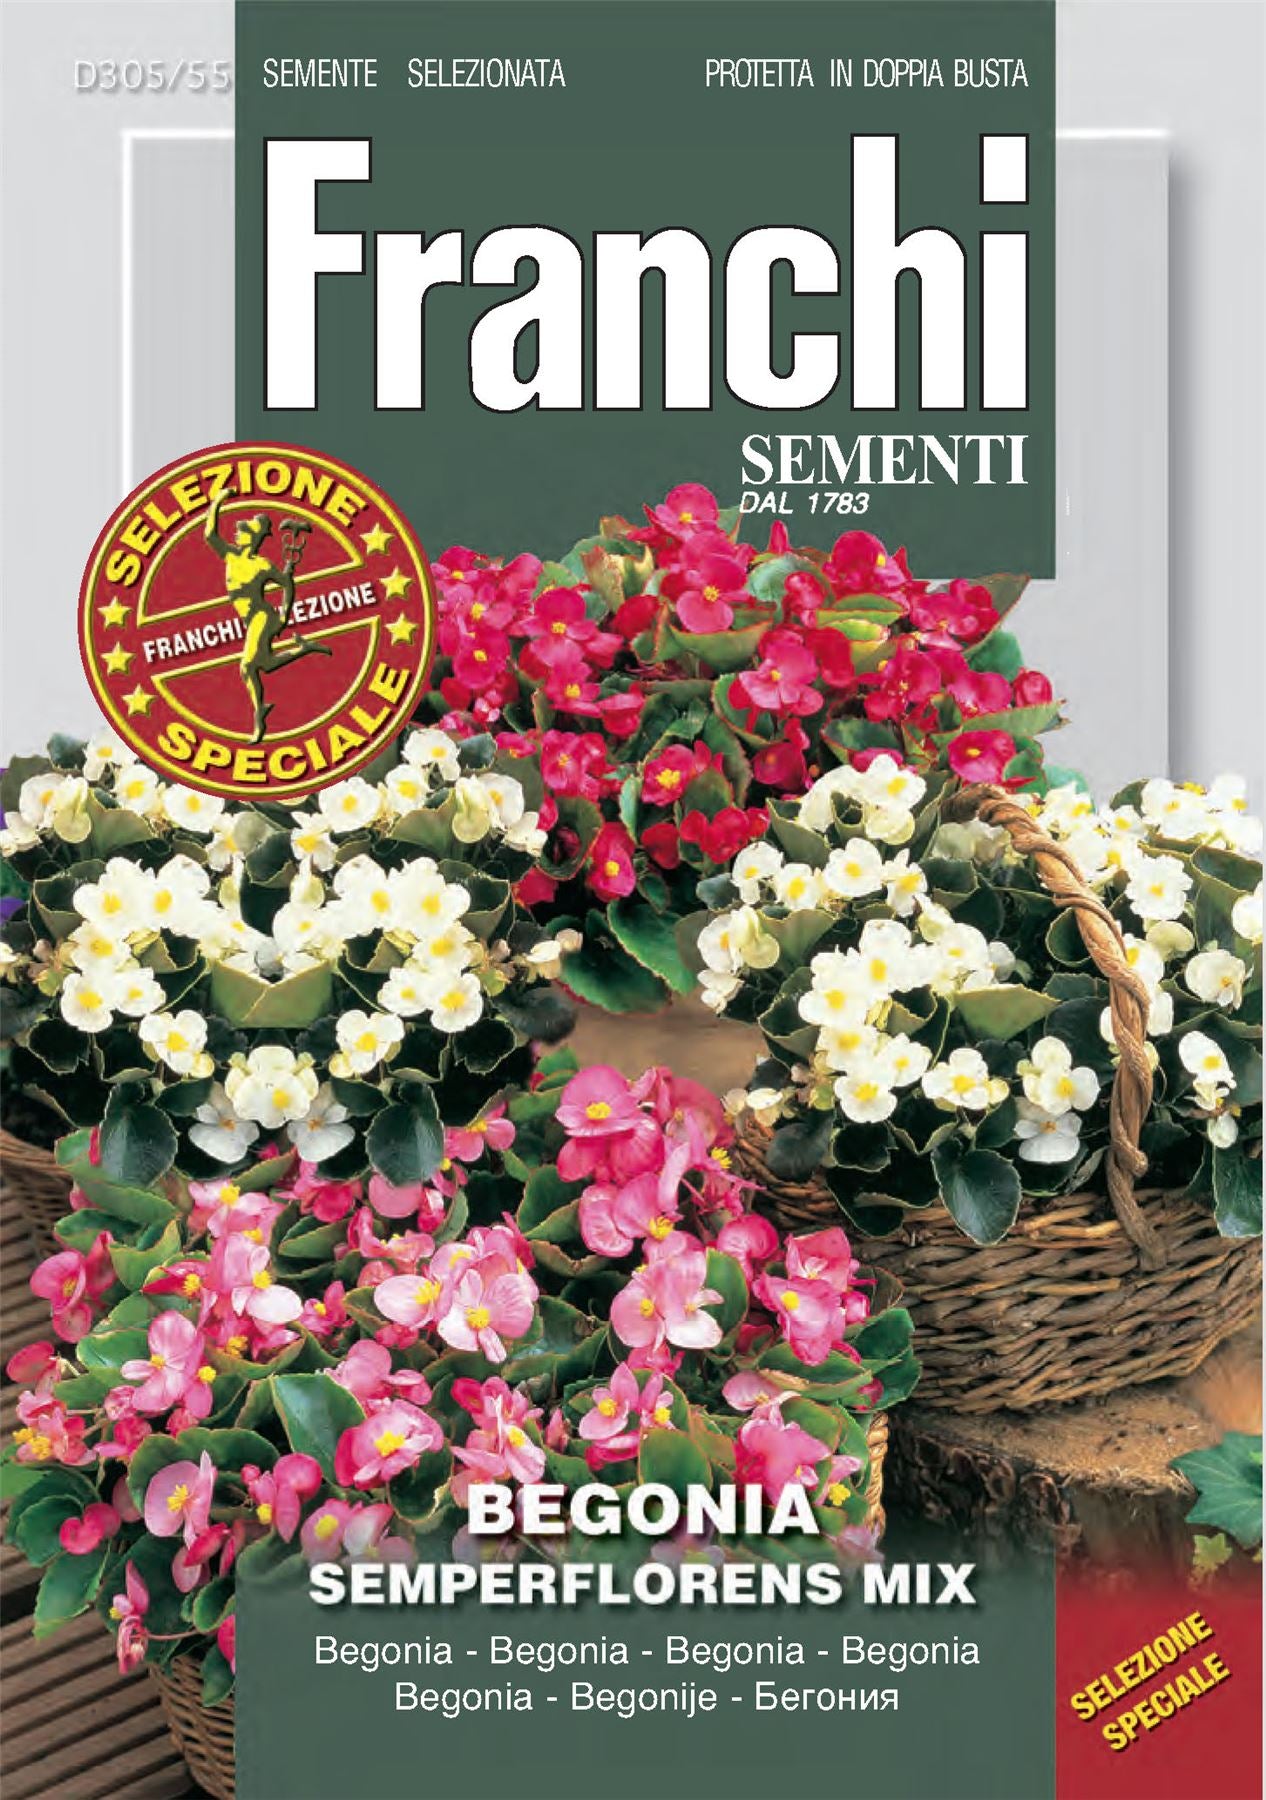 Franchi - FDBF_S 305-55 - Begonia semperflorens Mix - Seeds - SD